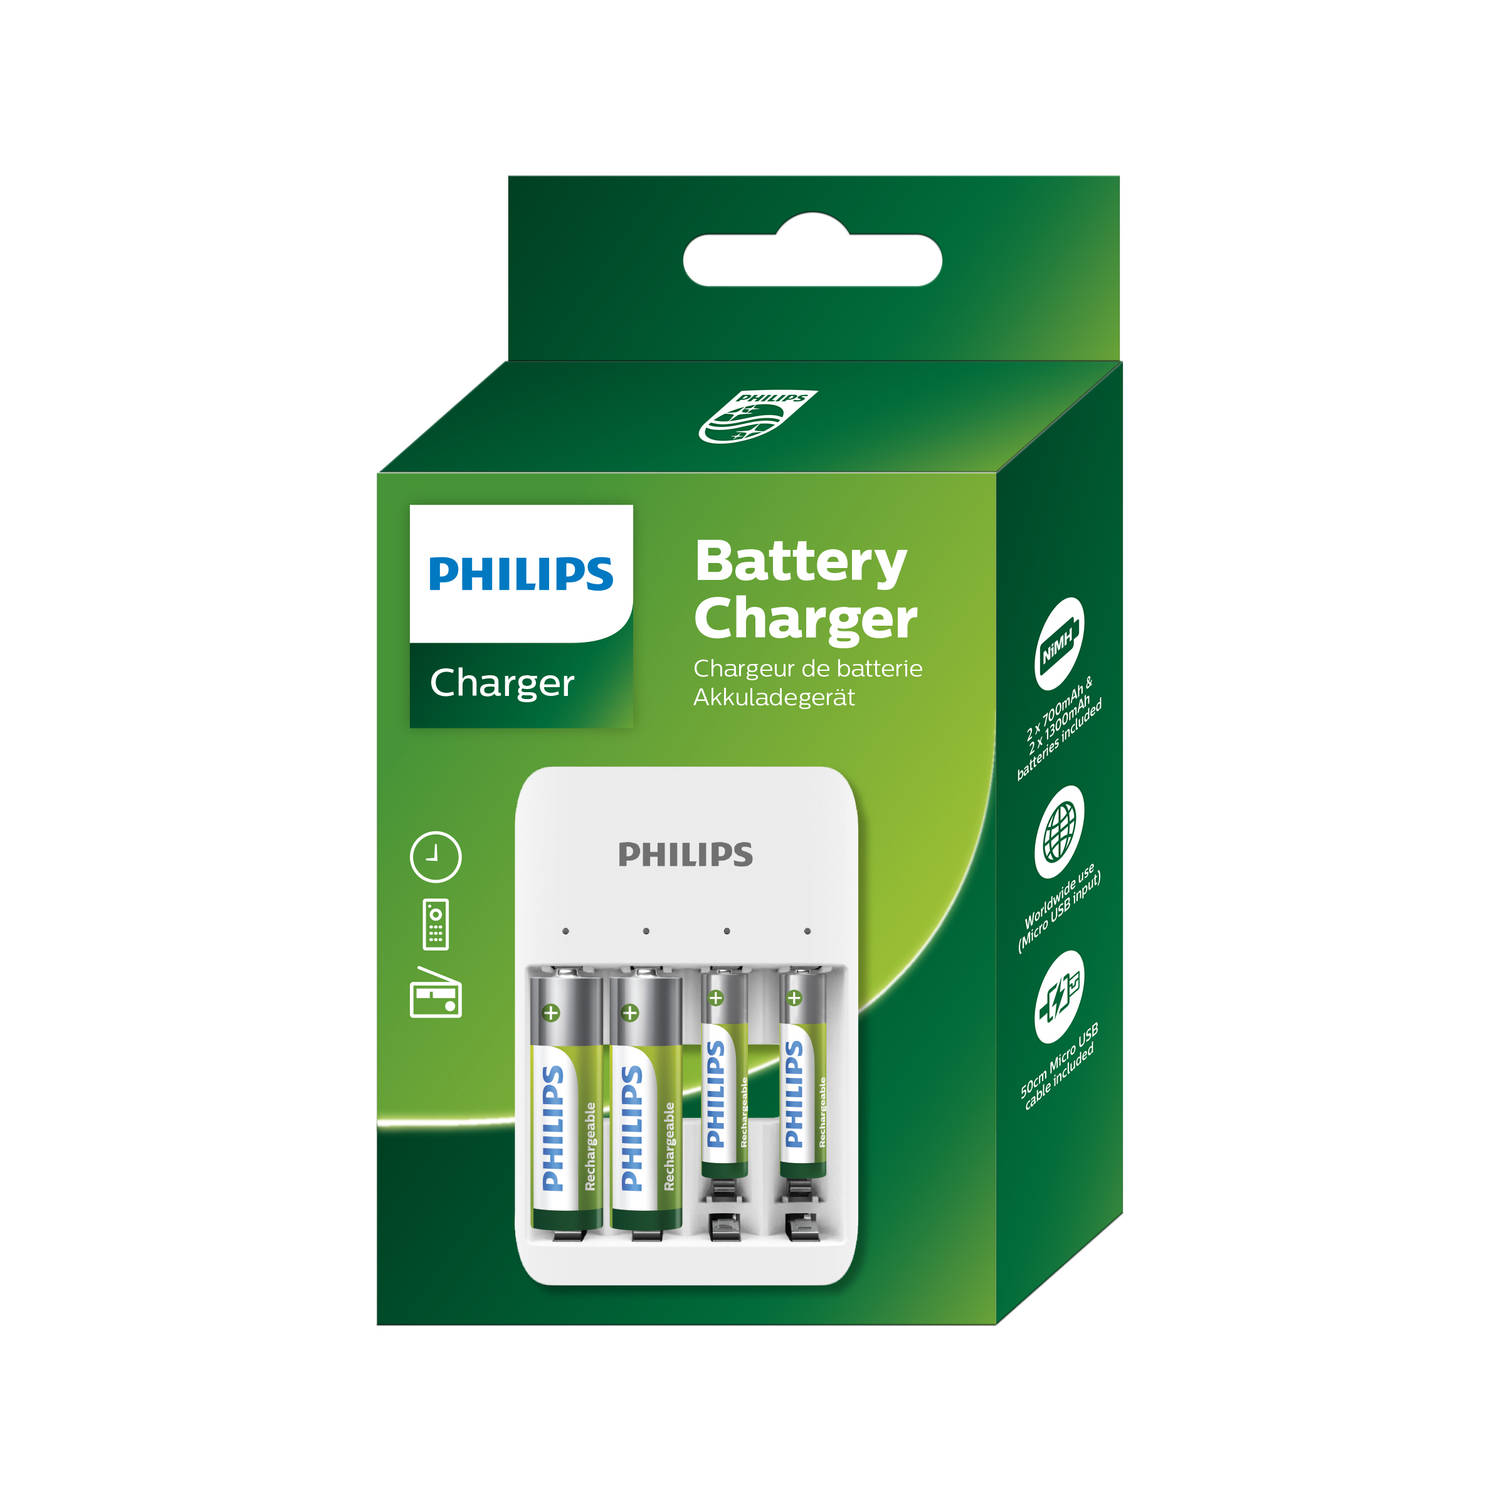 Philips Batterij Oplader - USB Oplaadbaar - Incl. AA Batterijen en AAA Batterijen - Universele Batterijlader